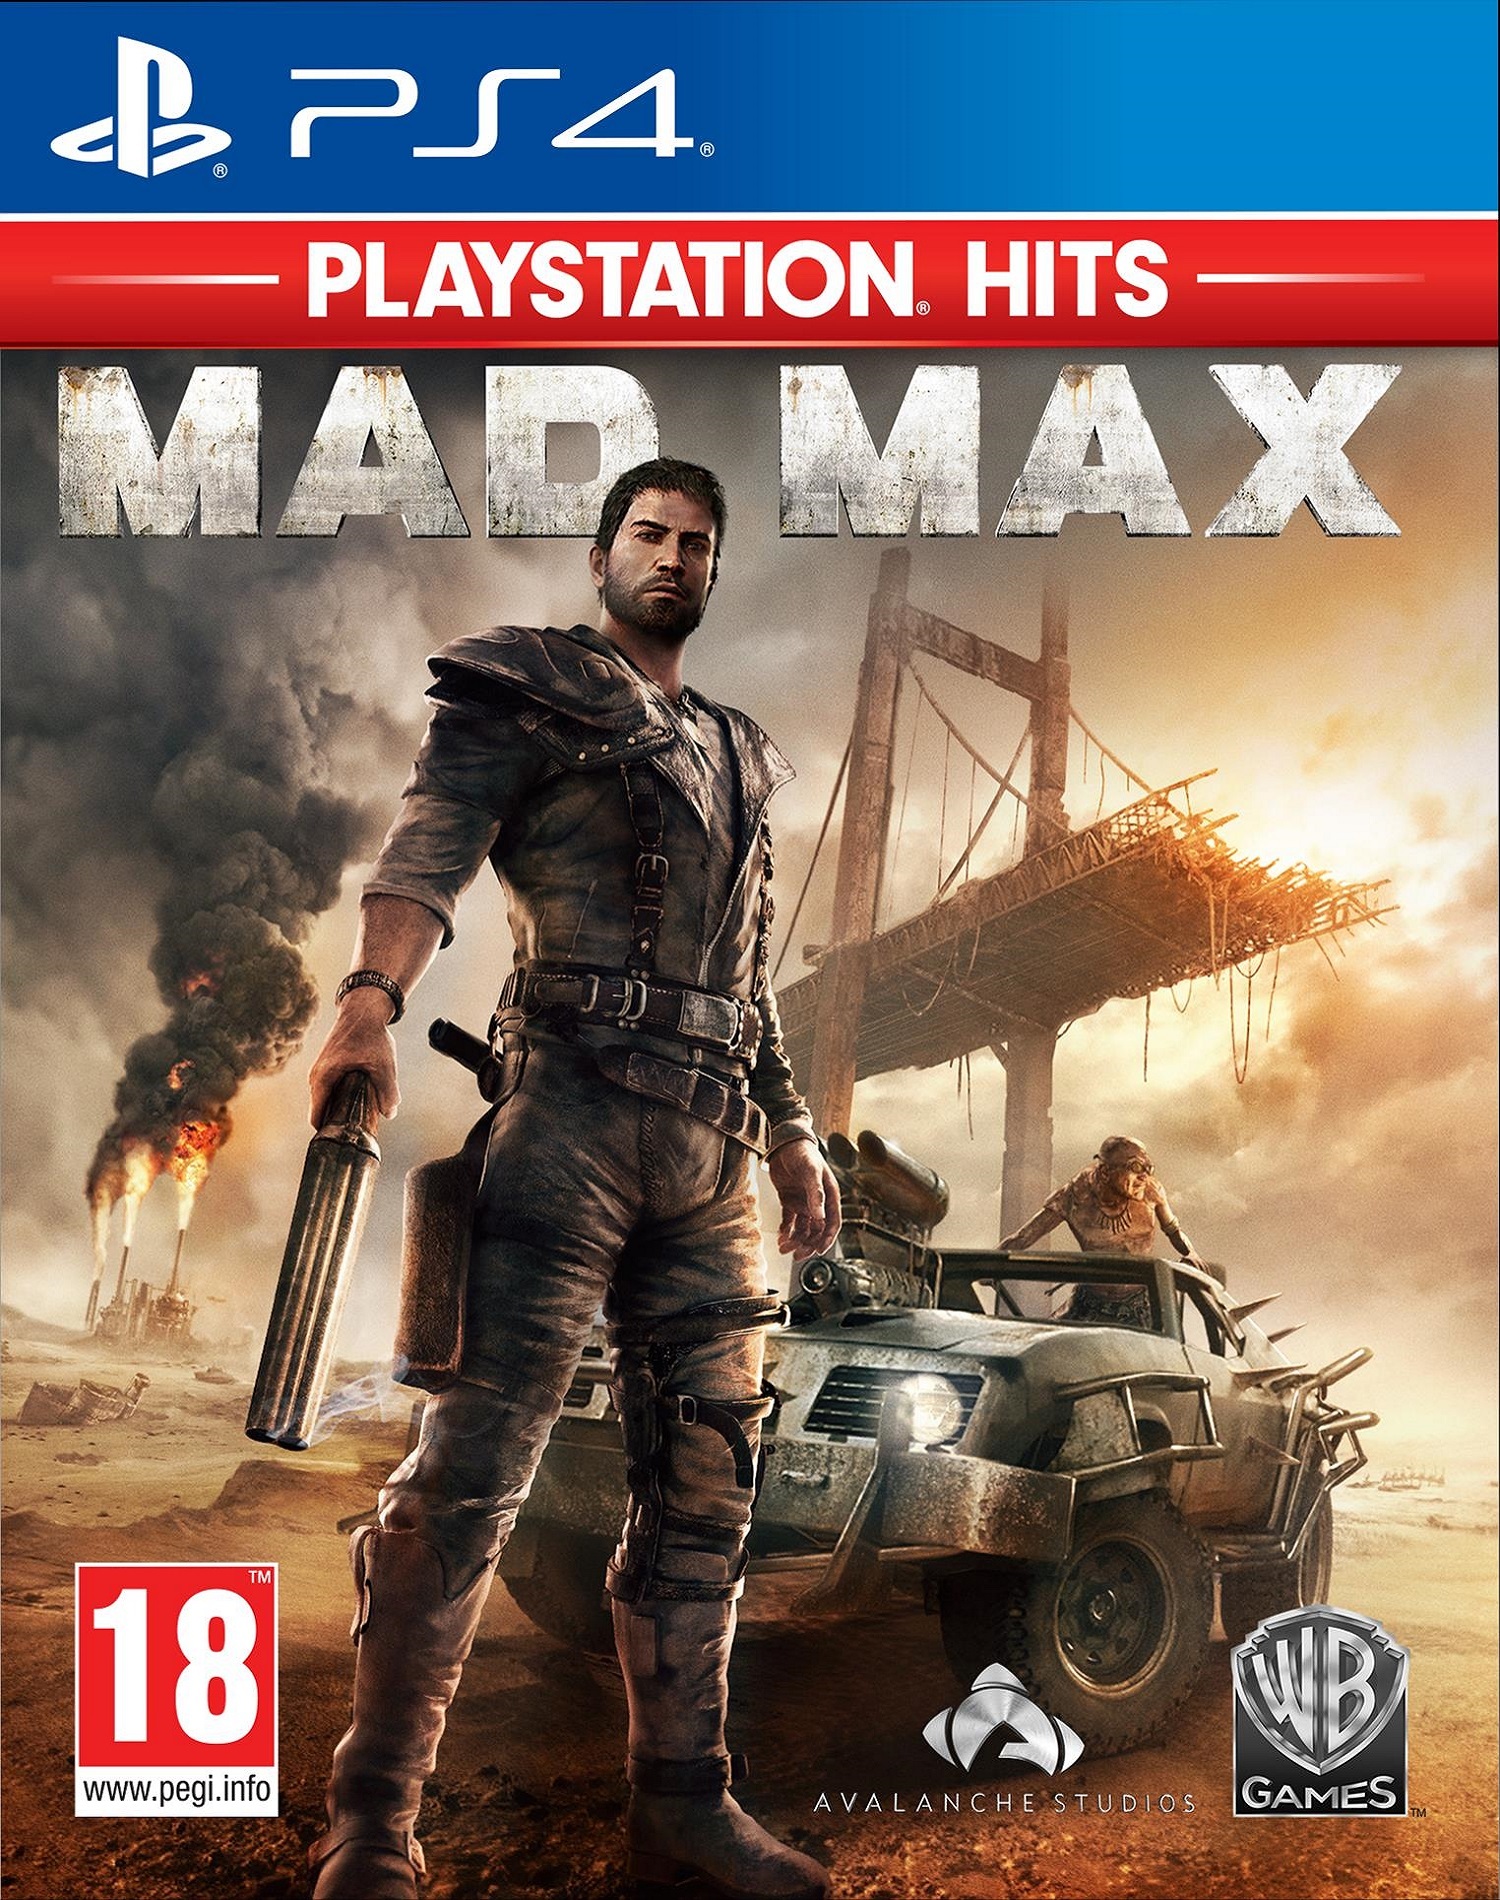 Warner Bros. Interactive Mad Max PC